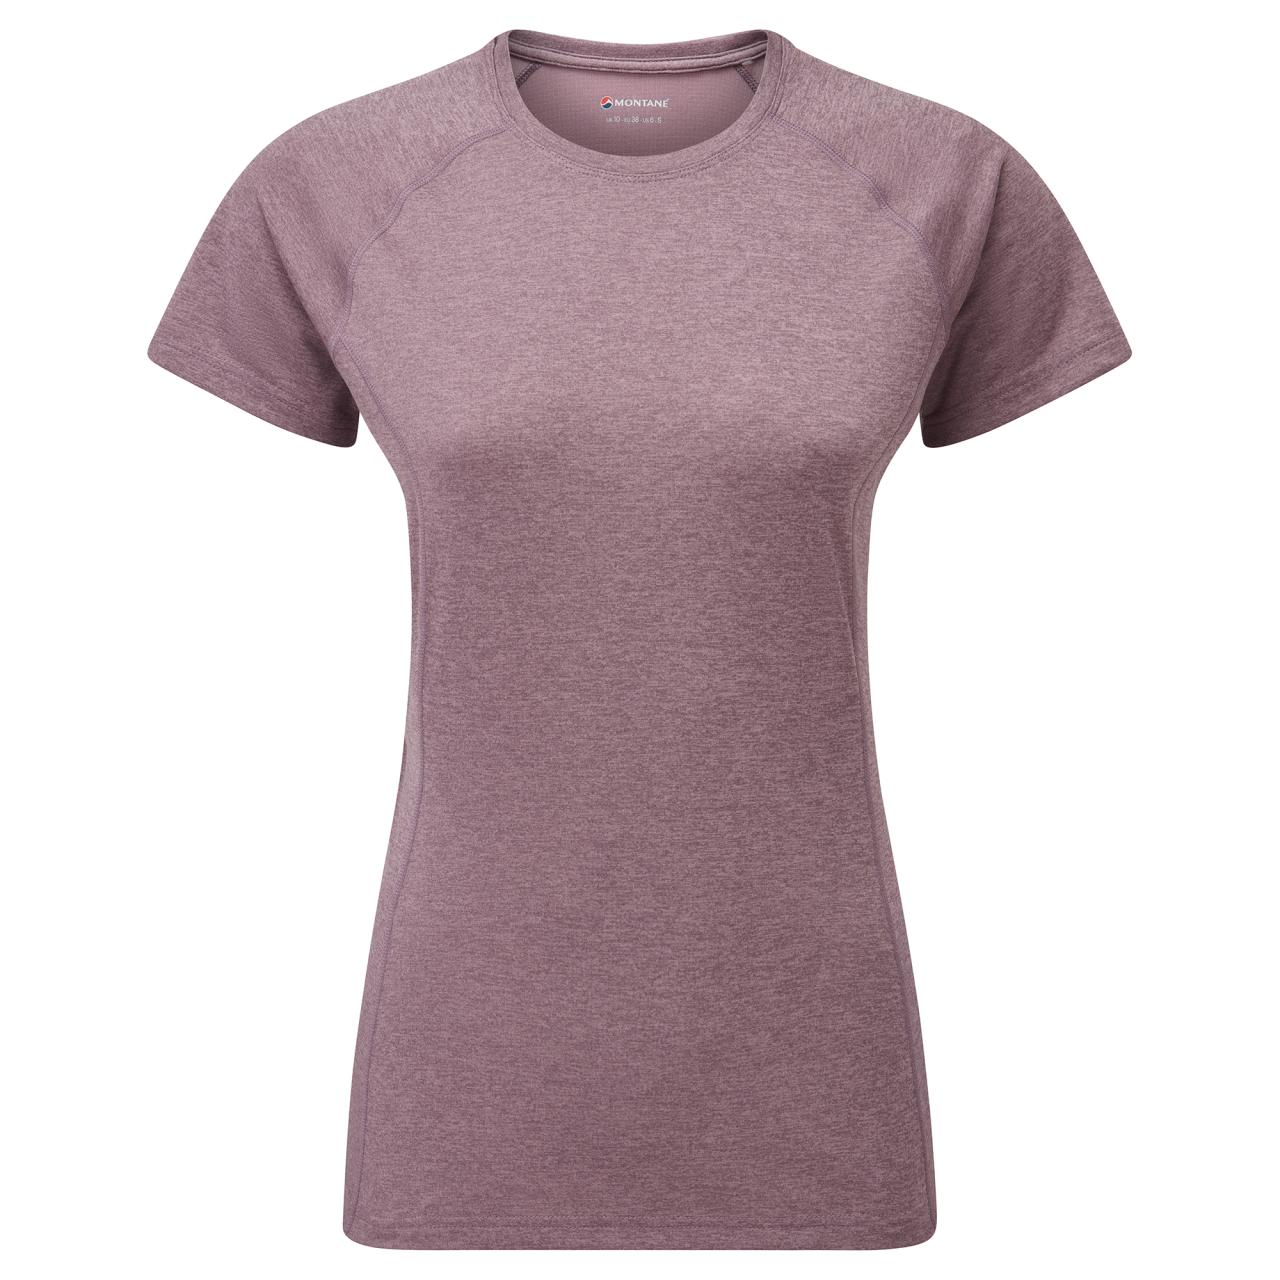 FEM DART T-SHIRT-MOONSCAPE-UK12/M dámské triko šedofialové